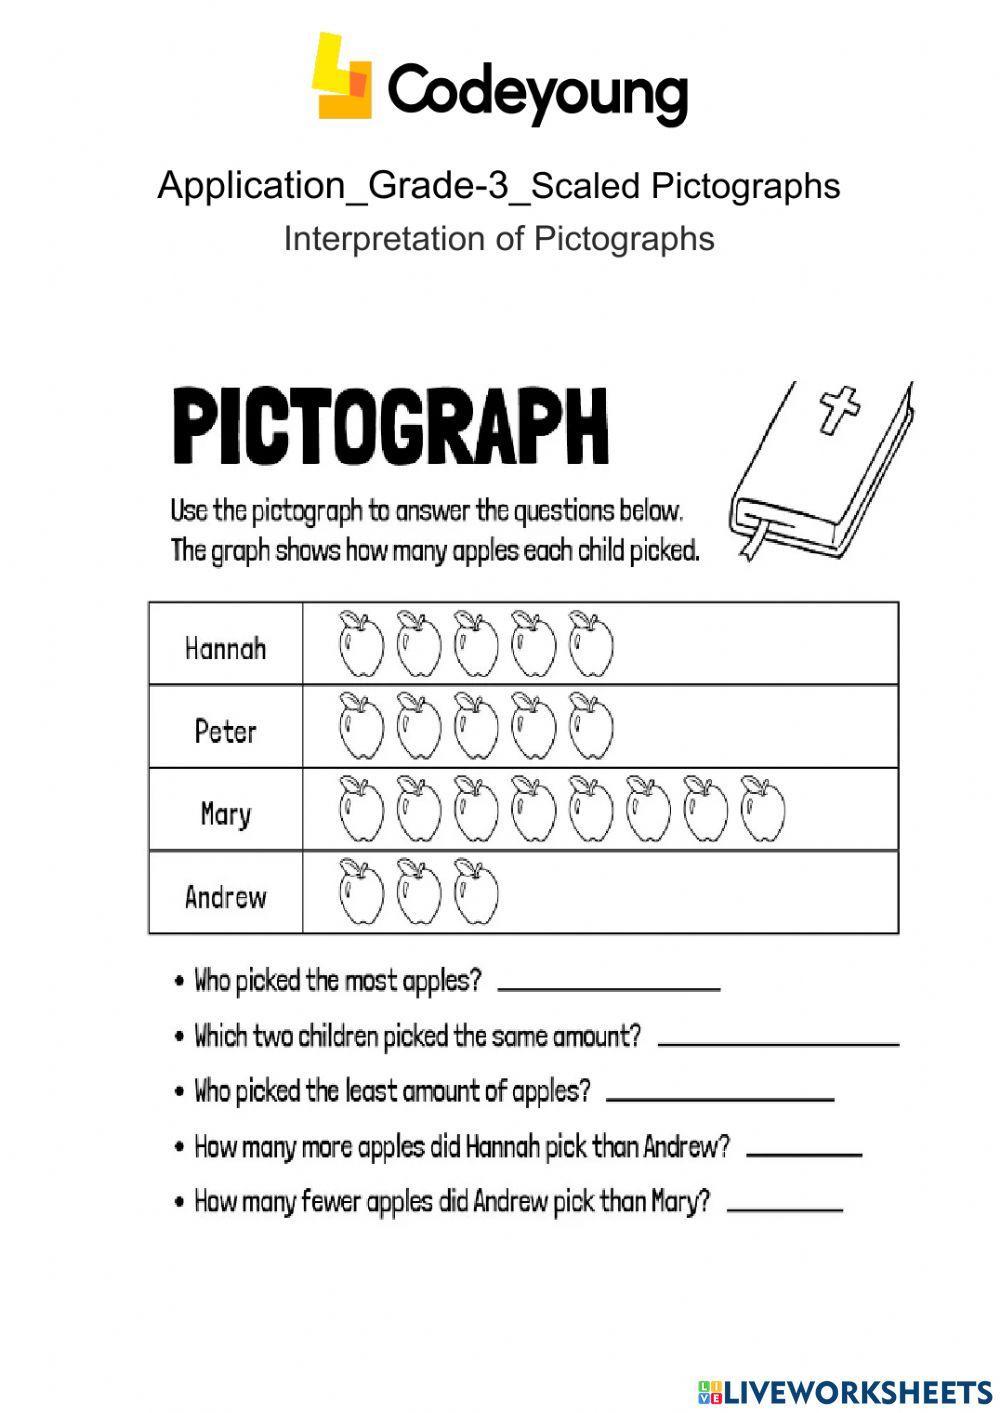 Pictograph